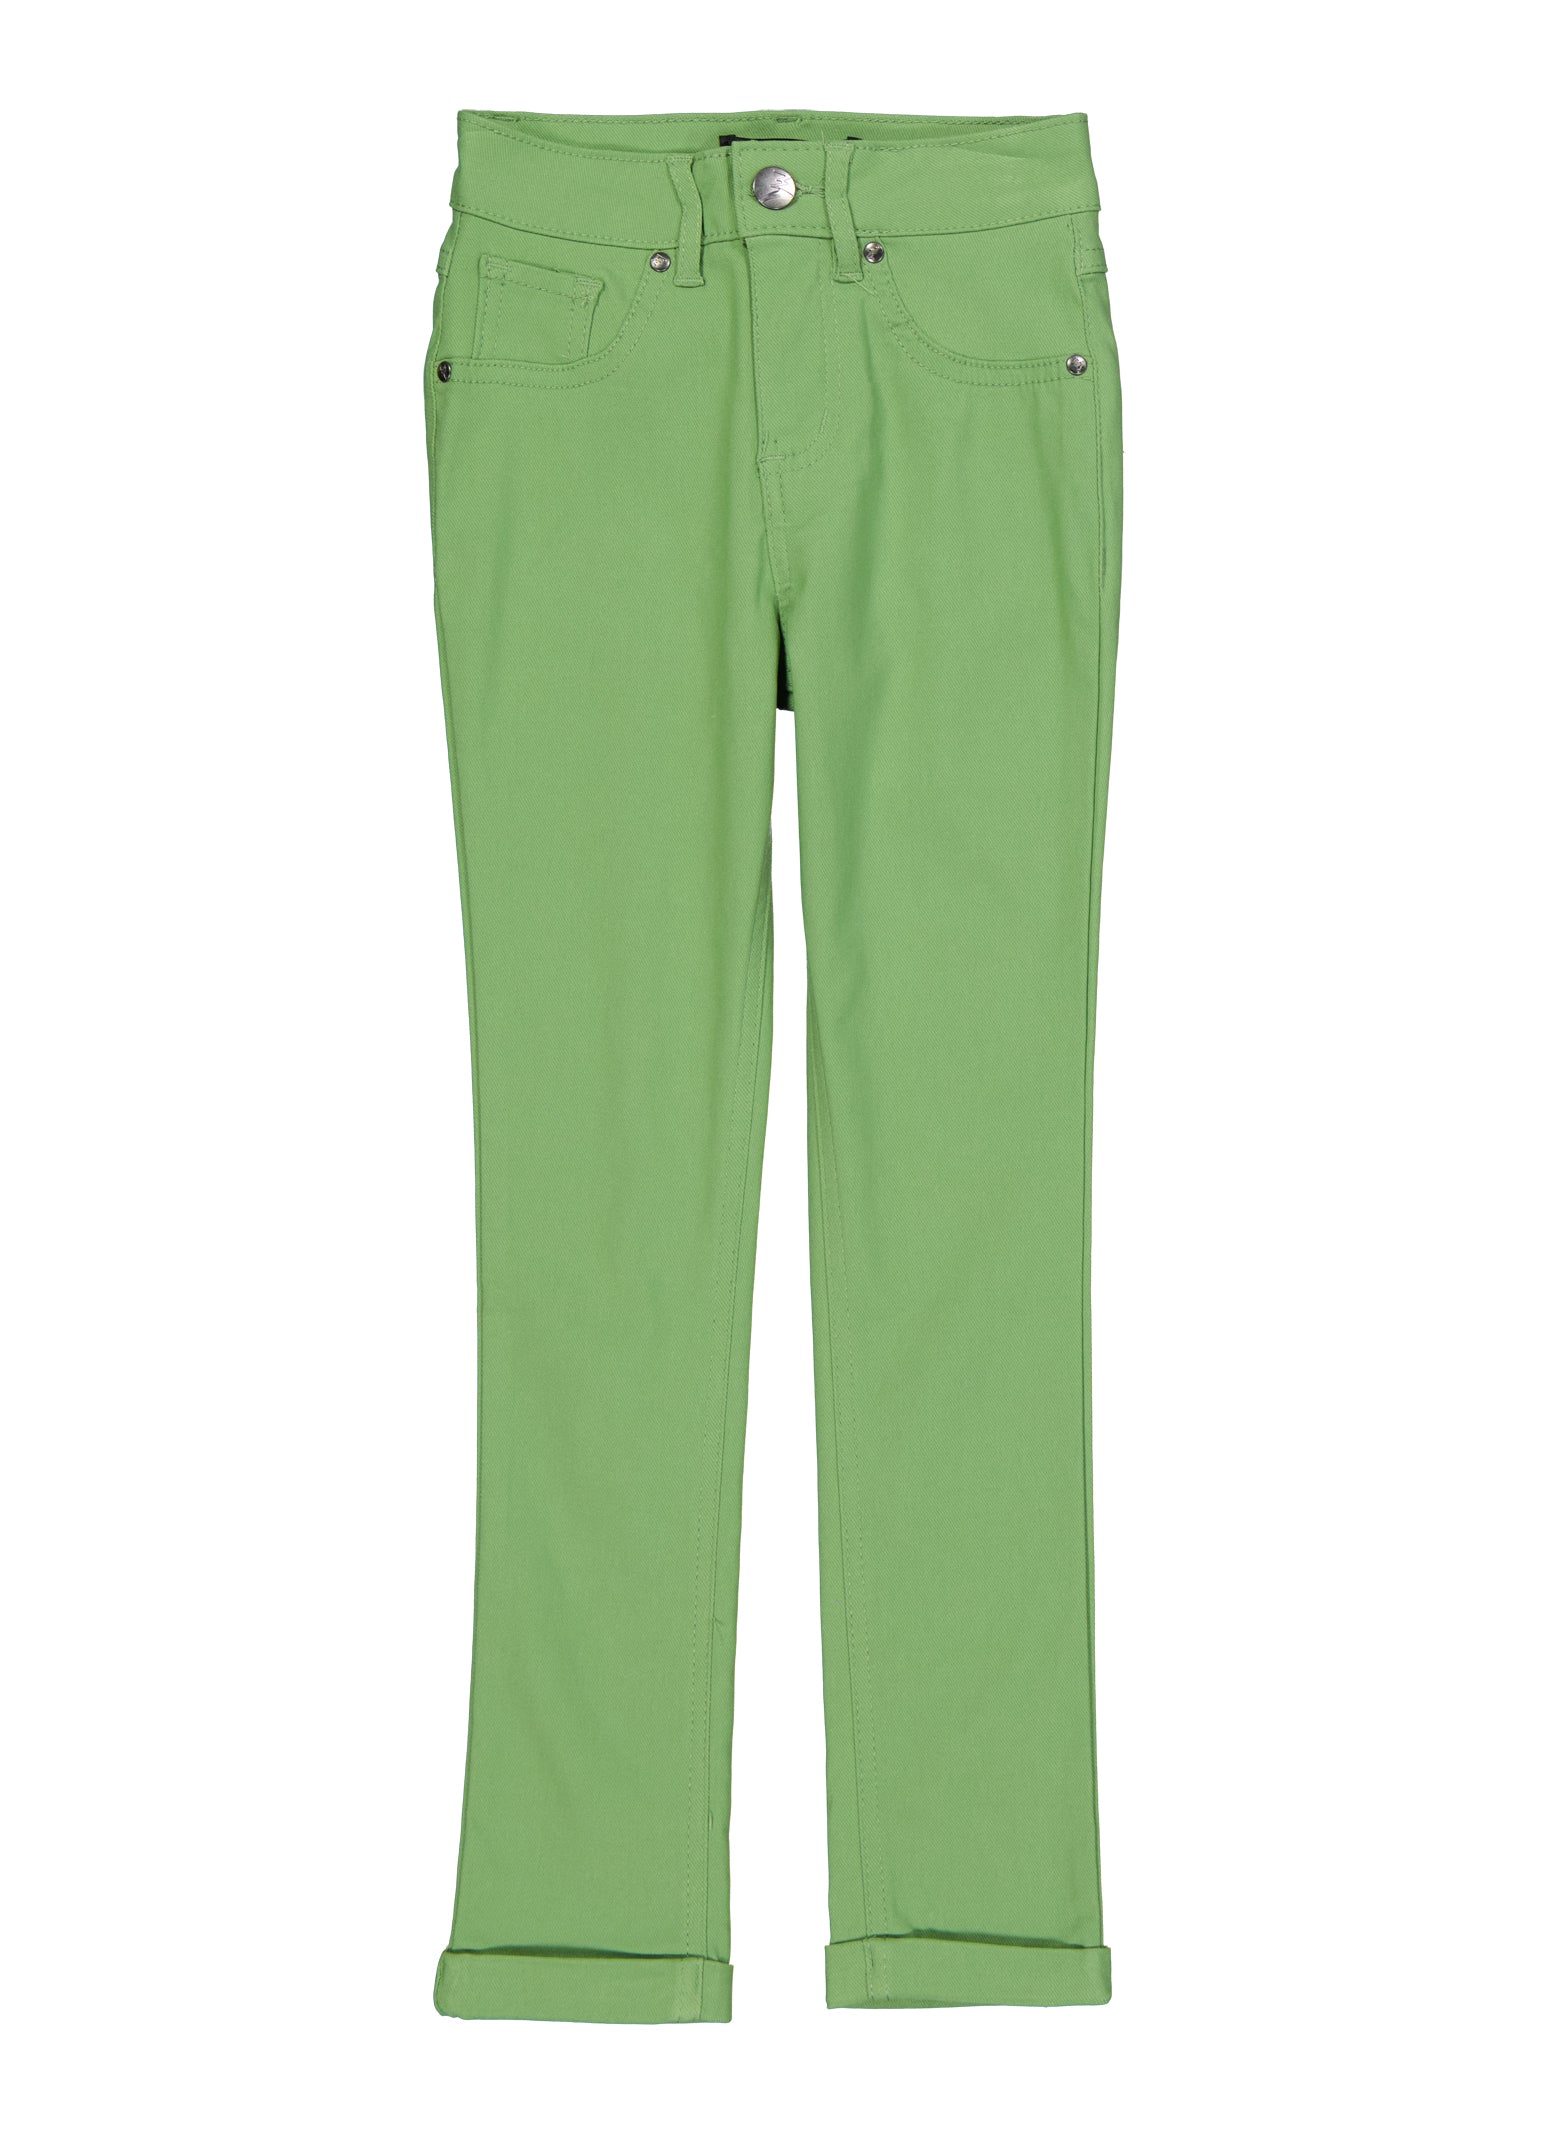 Naughty Ninos Girls Green Printed Flared Hem Quick Dry Pants